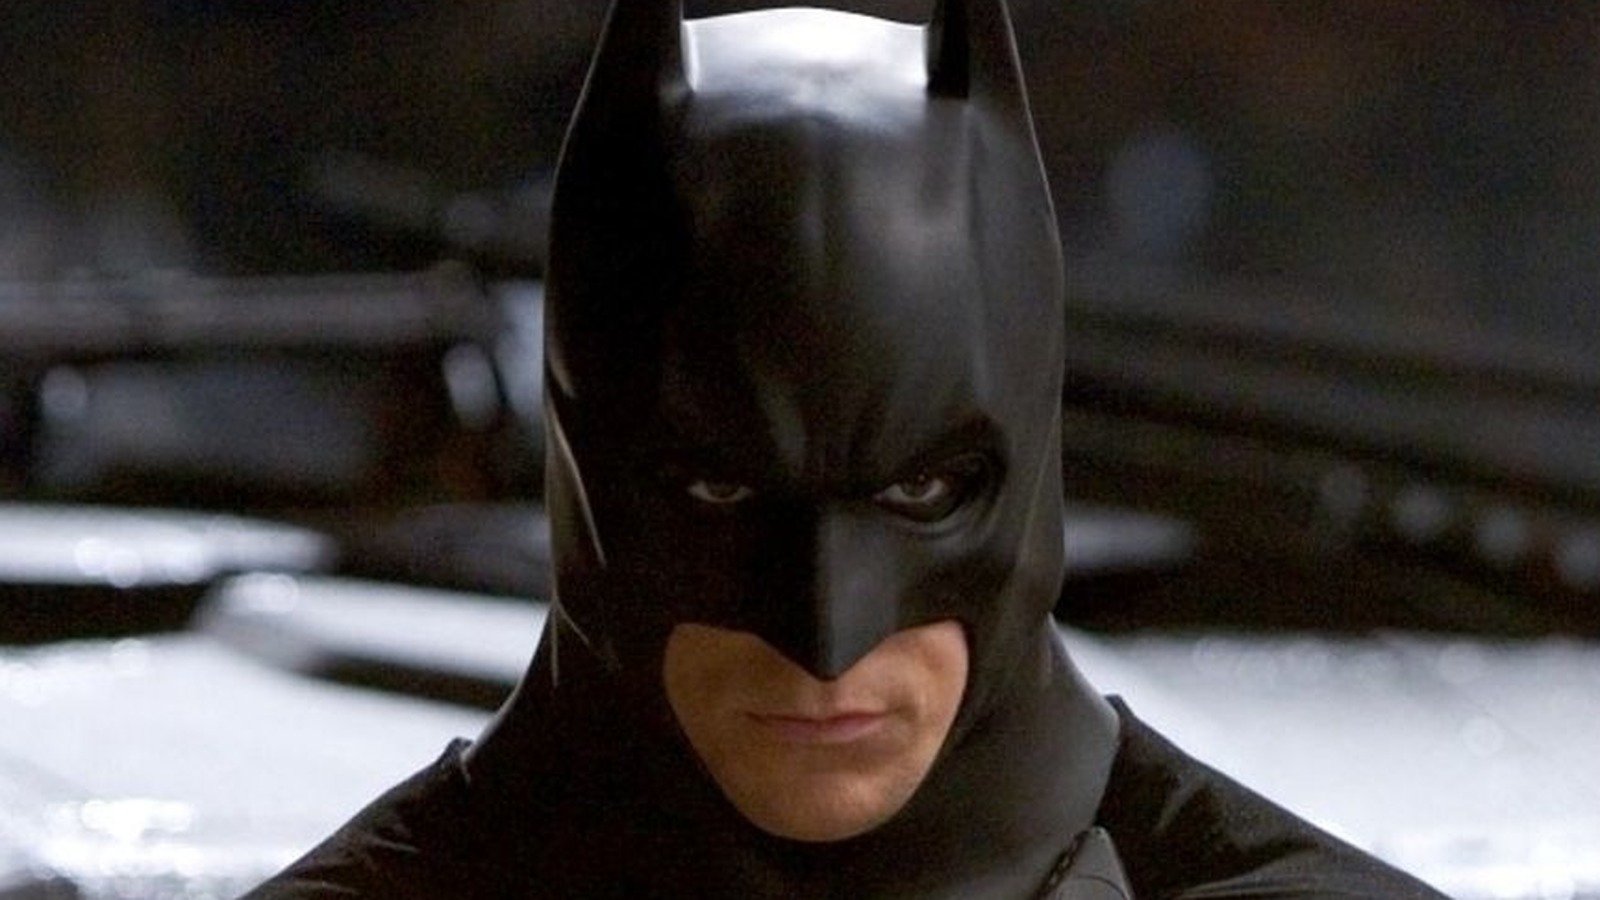 The Batman Begins Scene That Christian Bale Slept Through On Set